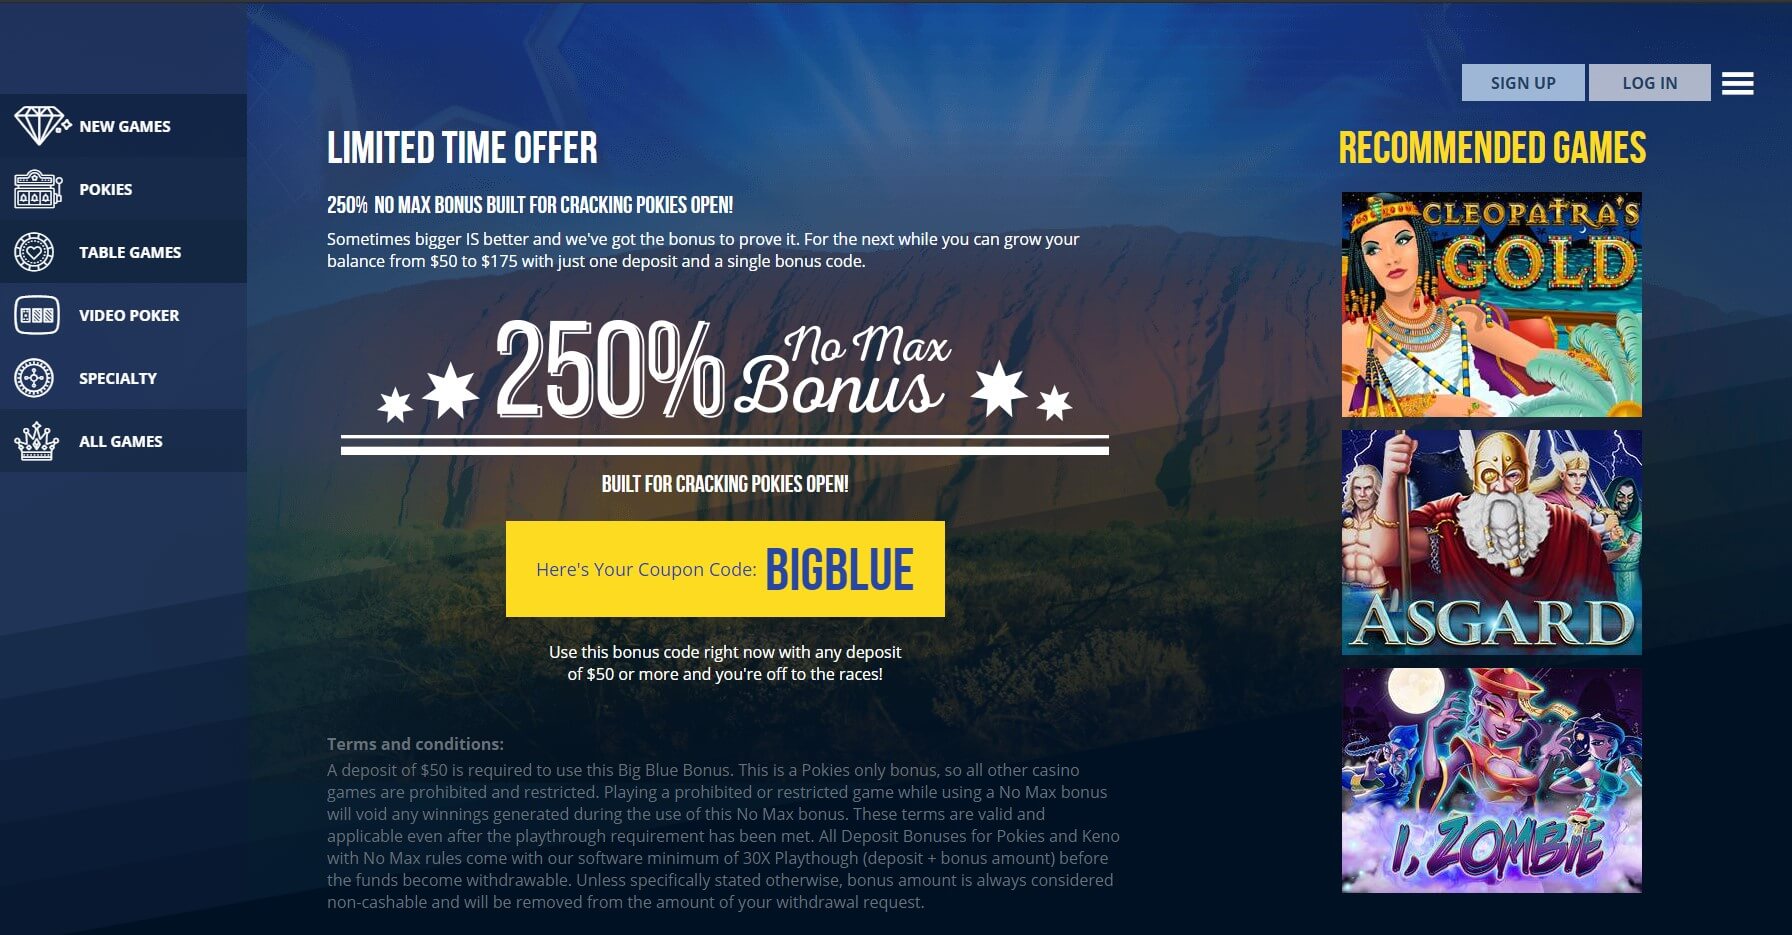 true blue limited time offer screenshot